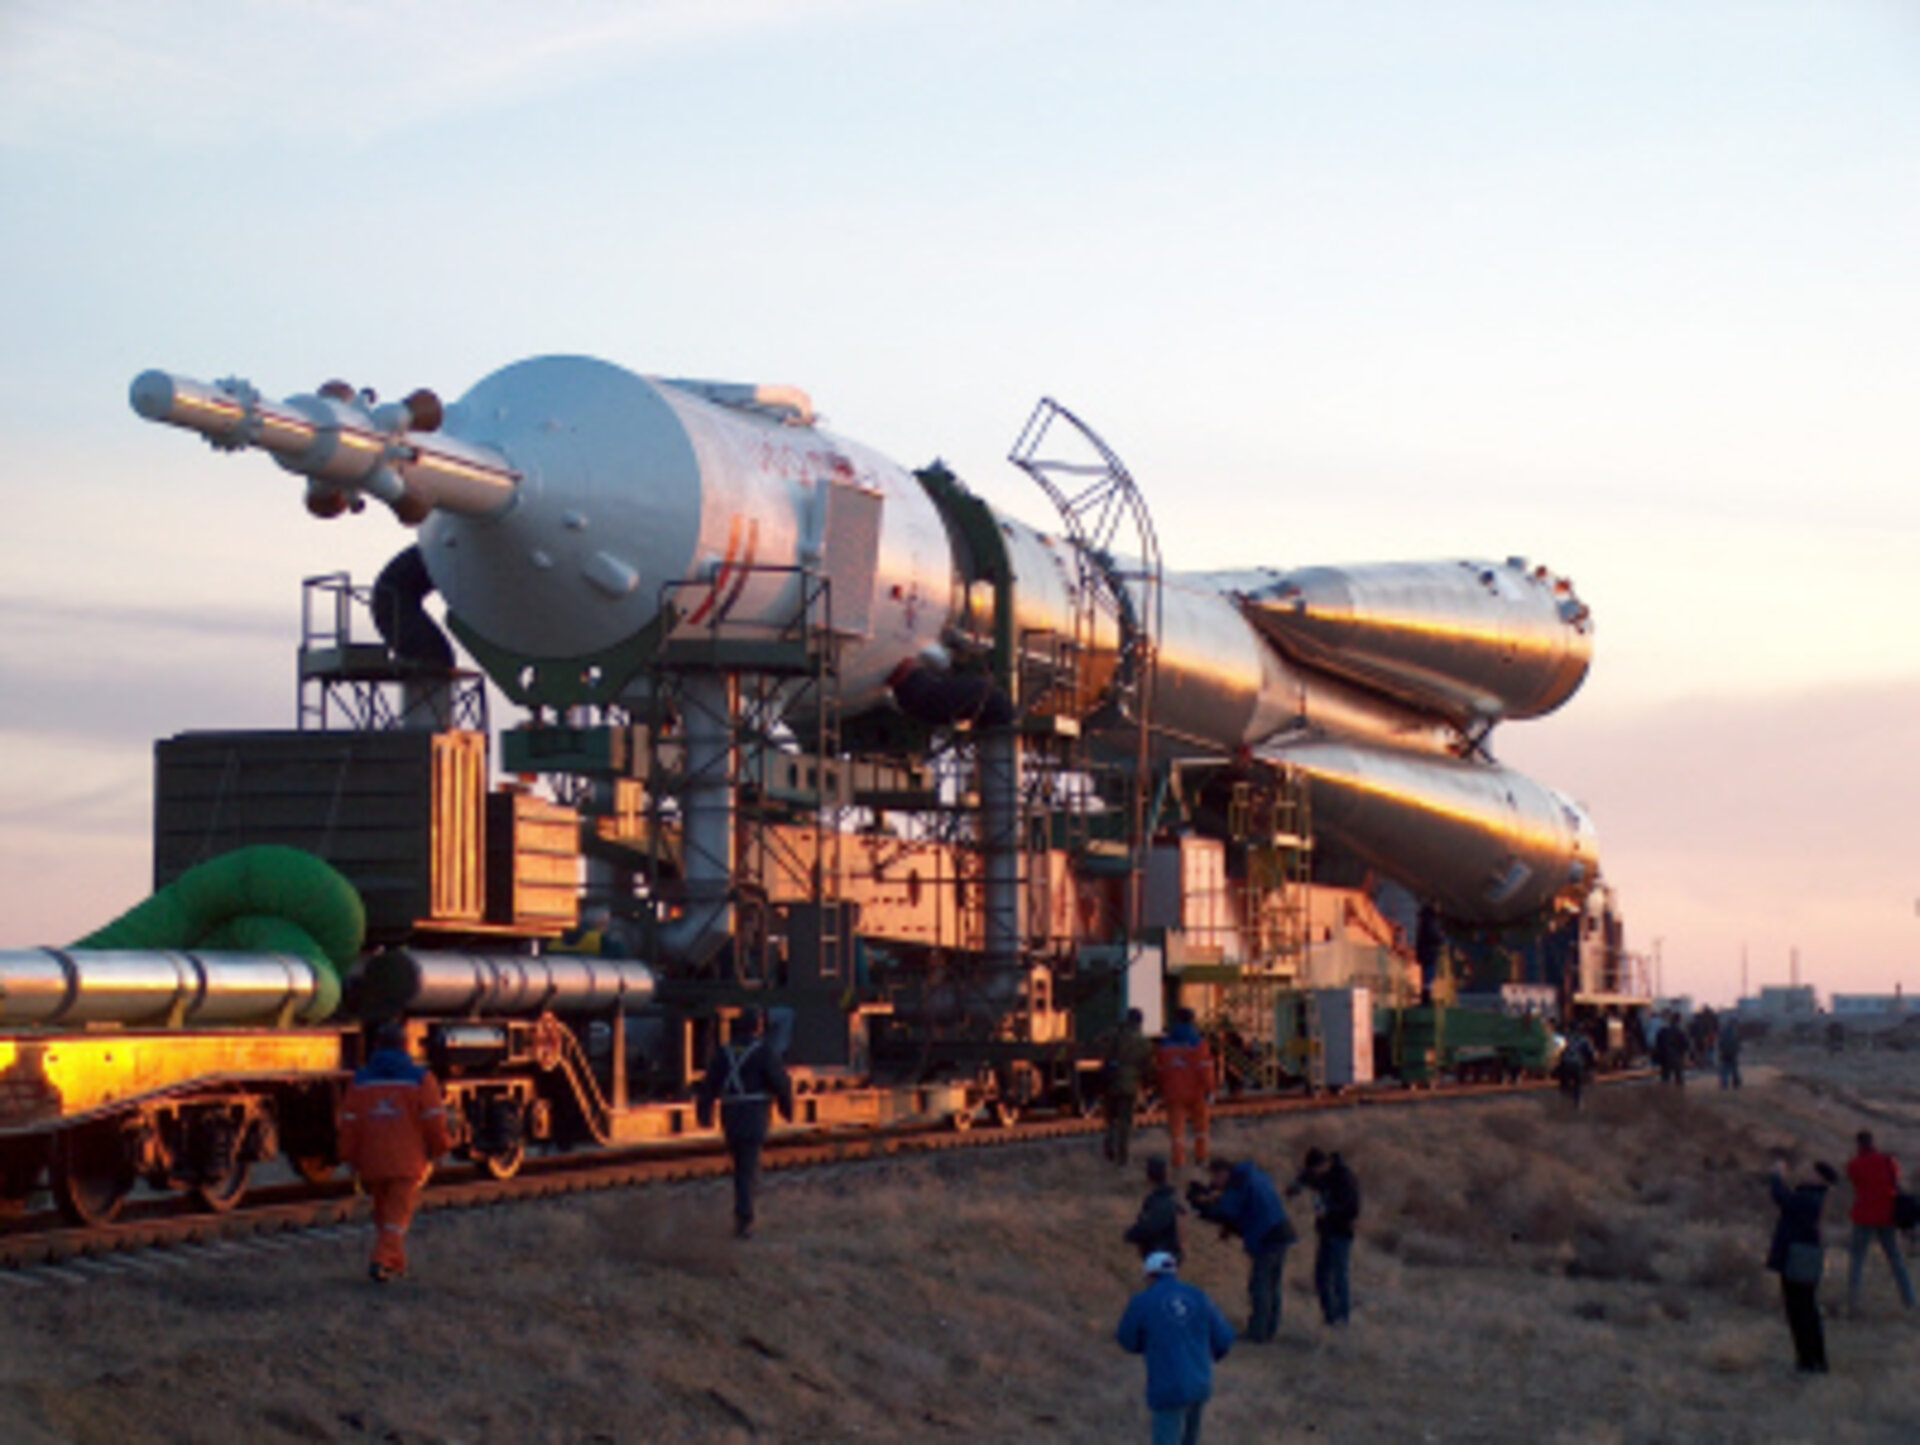 Delta mission Soyuz rocket rollout in Baikonour